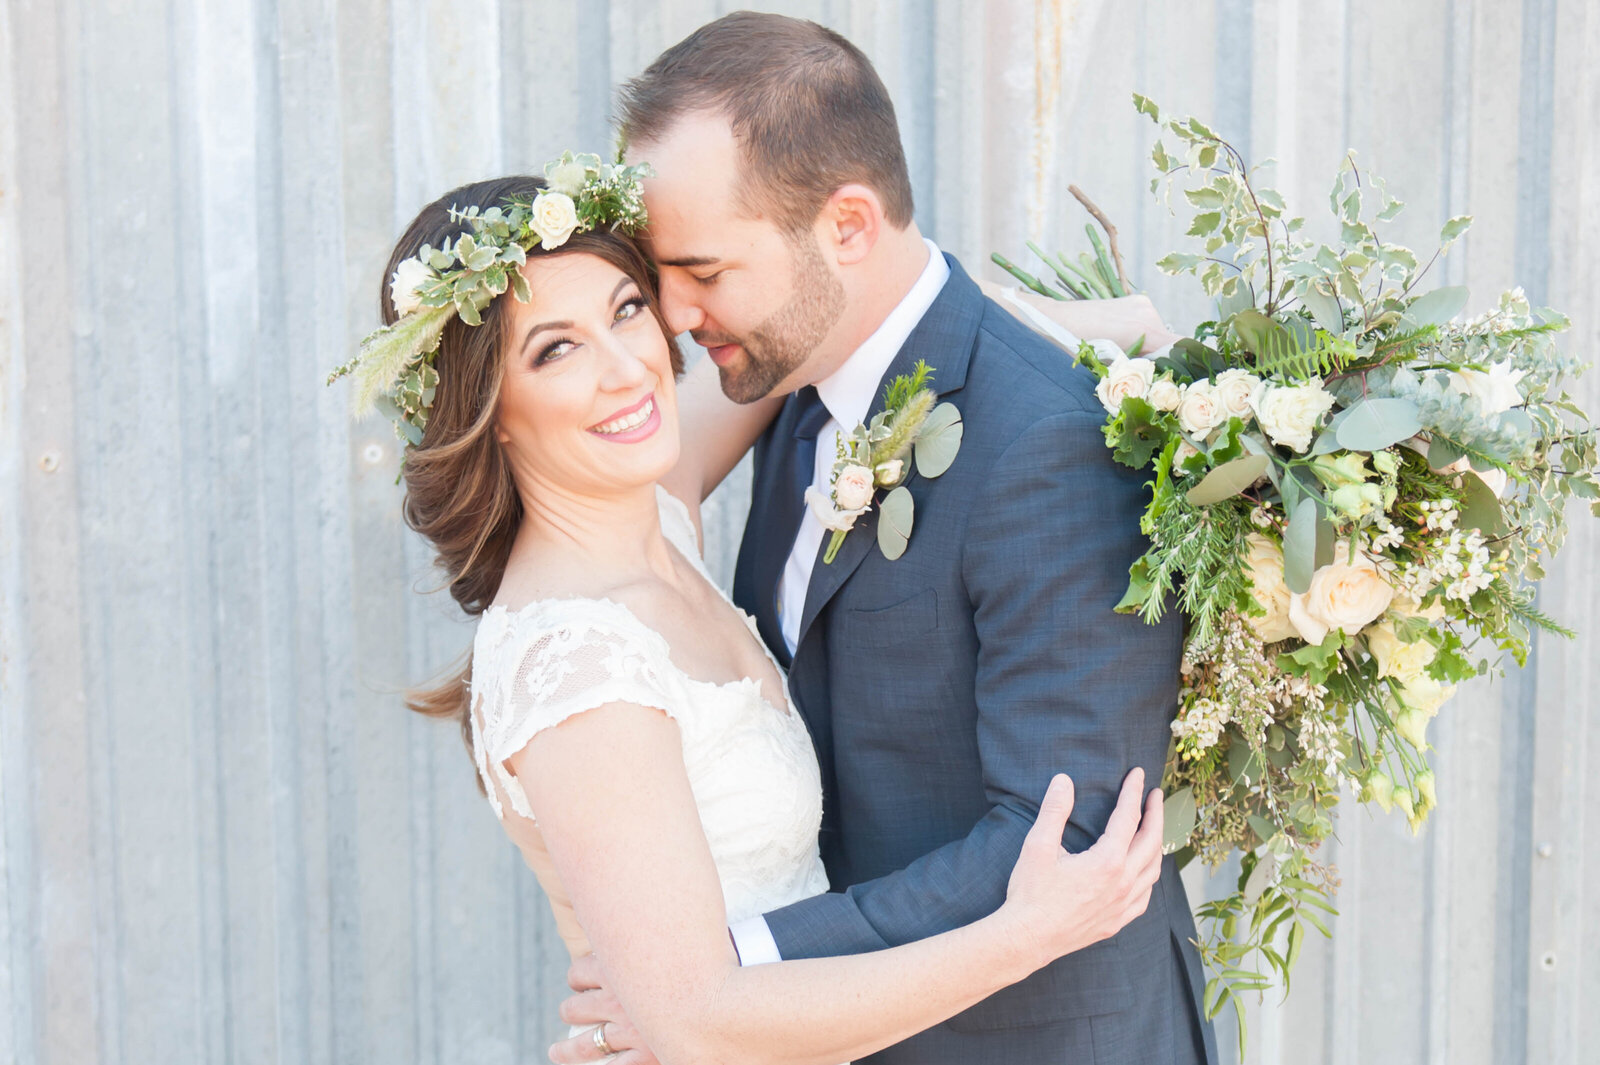 Flower crown for wedding, Dallas wedding photographer